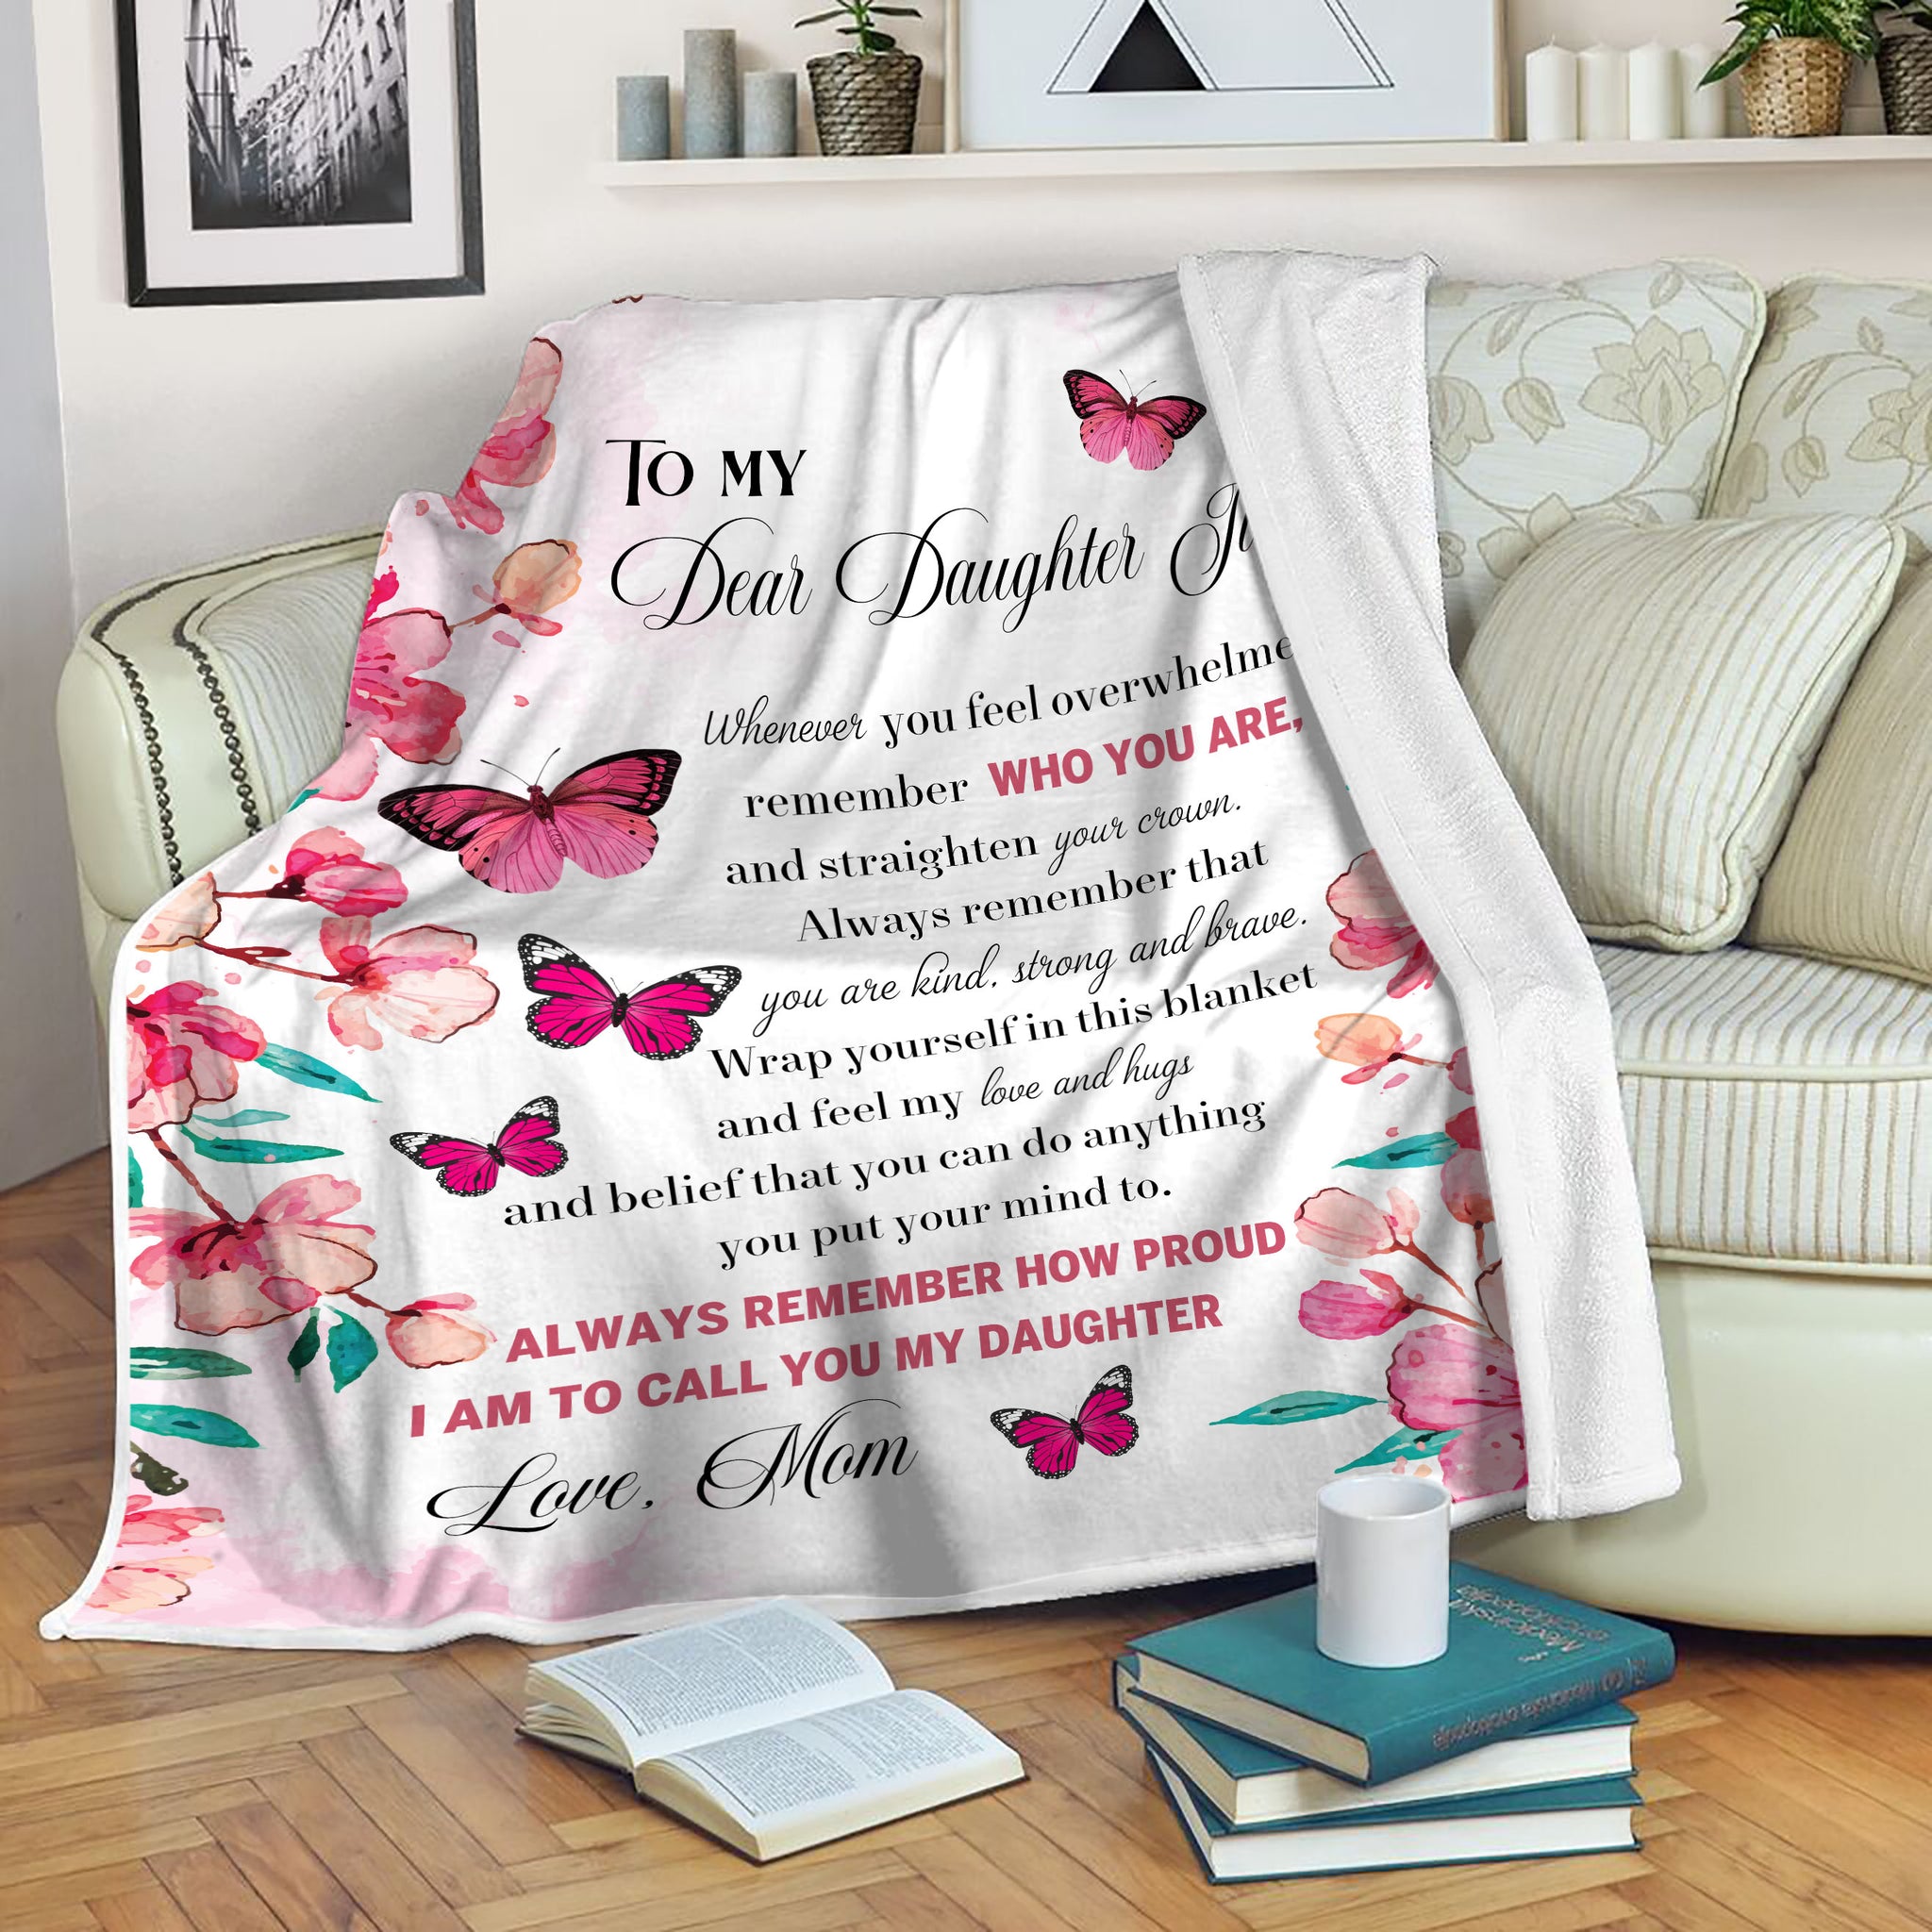 Personalized Blanket To My Daughter Straighten Your Crown Butterfly Fleece Blanket Comfort Gift for Daughter from Mom Daughter Blanket Gift for Christmas Birthday Graduation| JB254